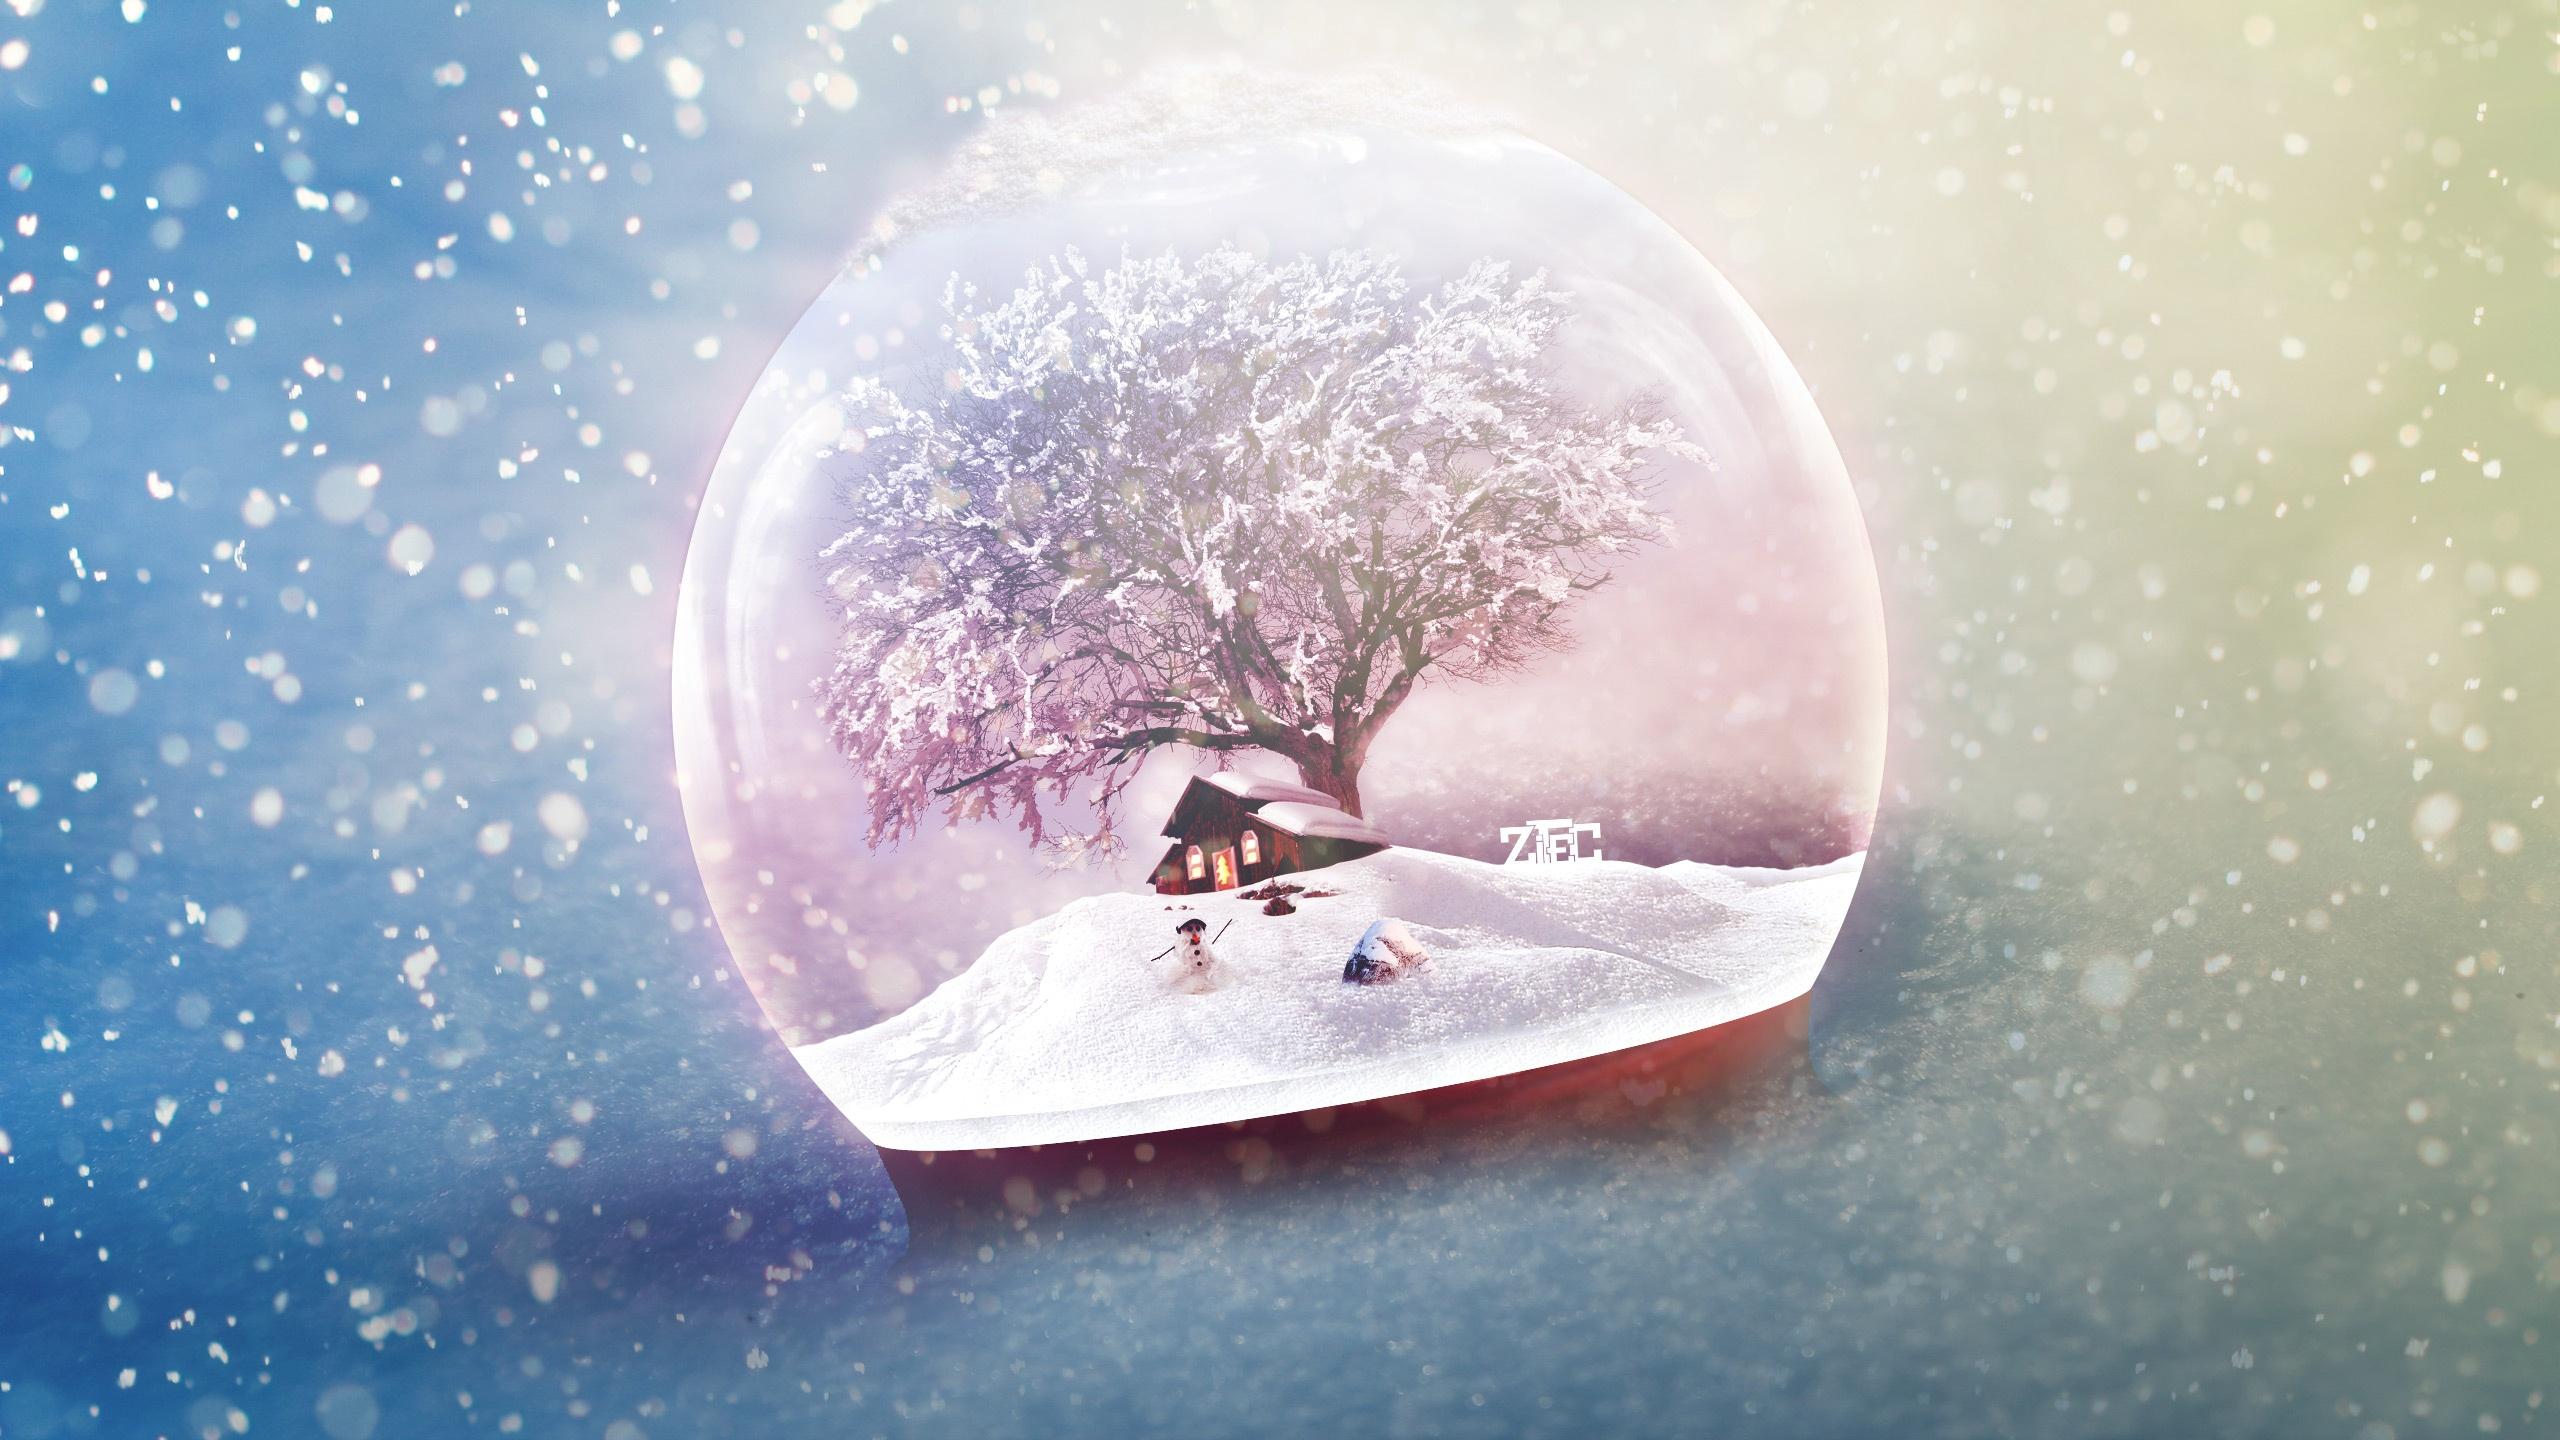 December Frost Wallpaper in jpg format for free download